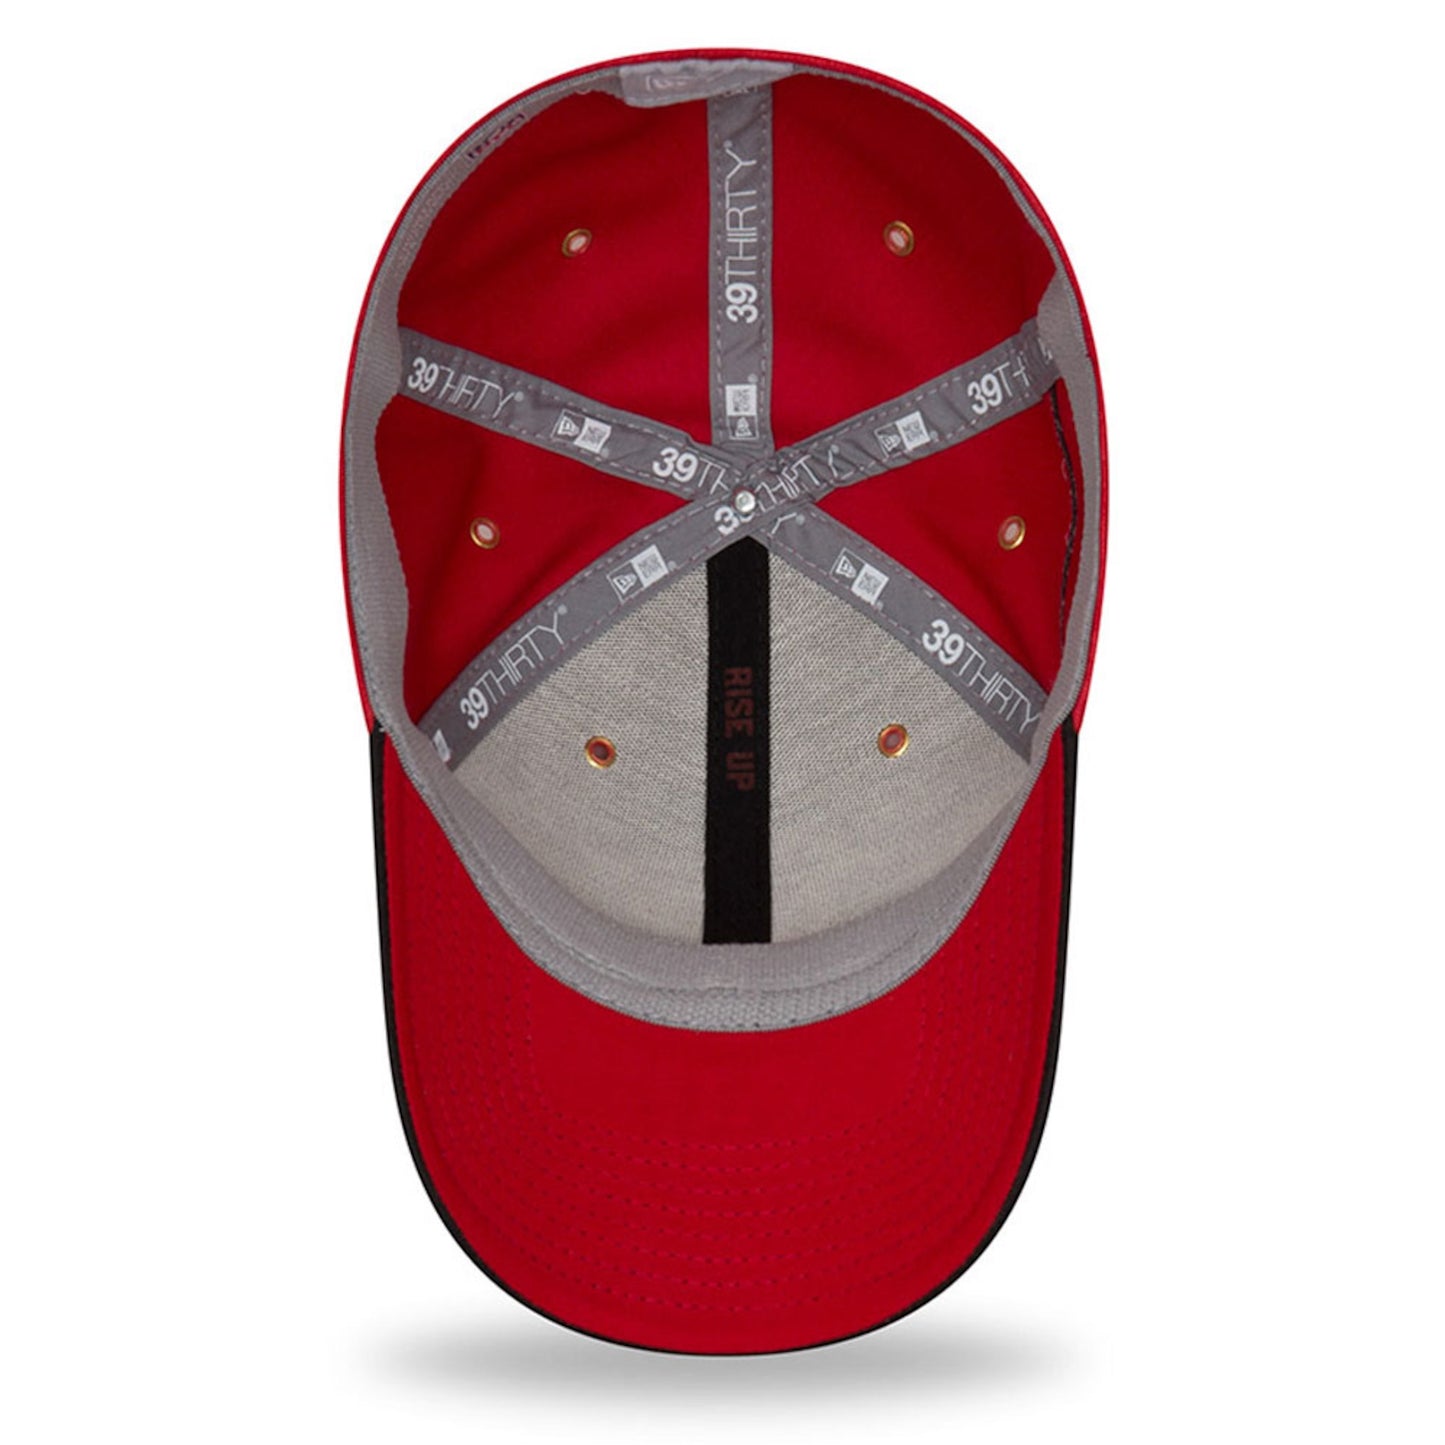 Men's Atlanta Falcons New Era Red/Black NFL18 Sideline Home Official 39THIRTY Flex Hat